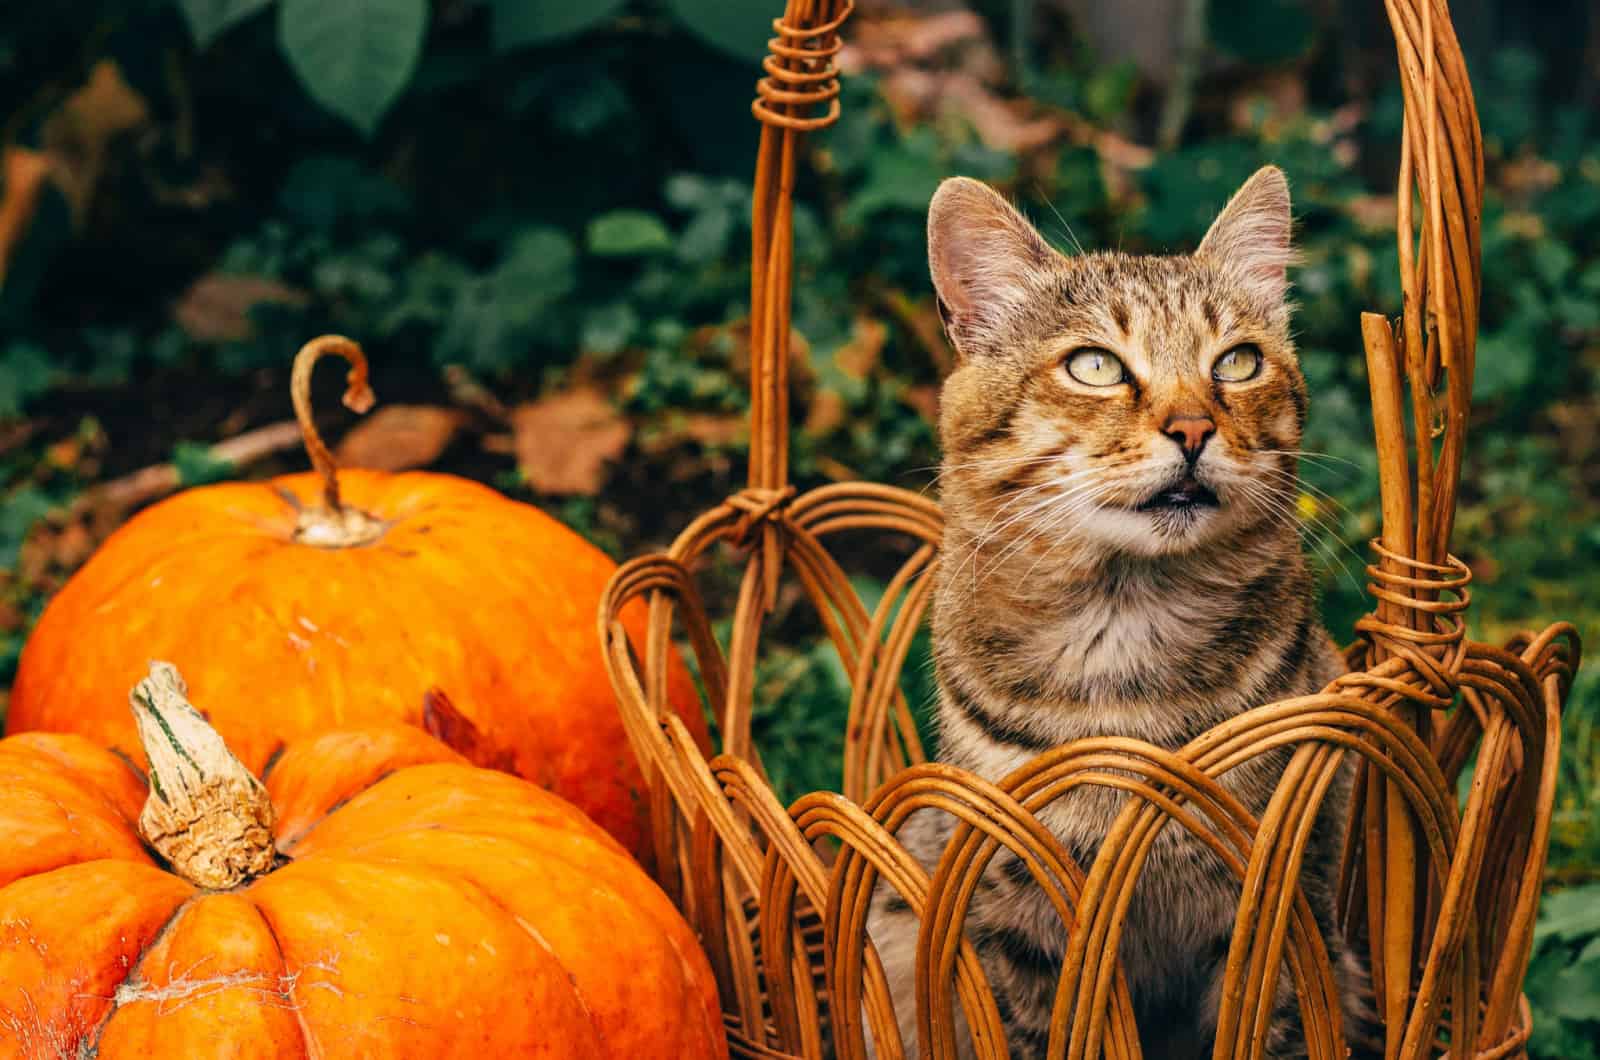 cat in a wicker basket next to pumpkins